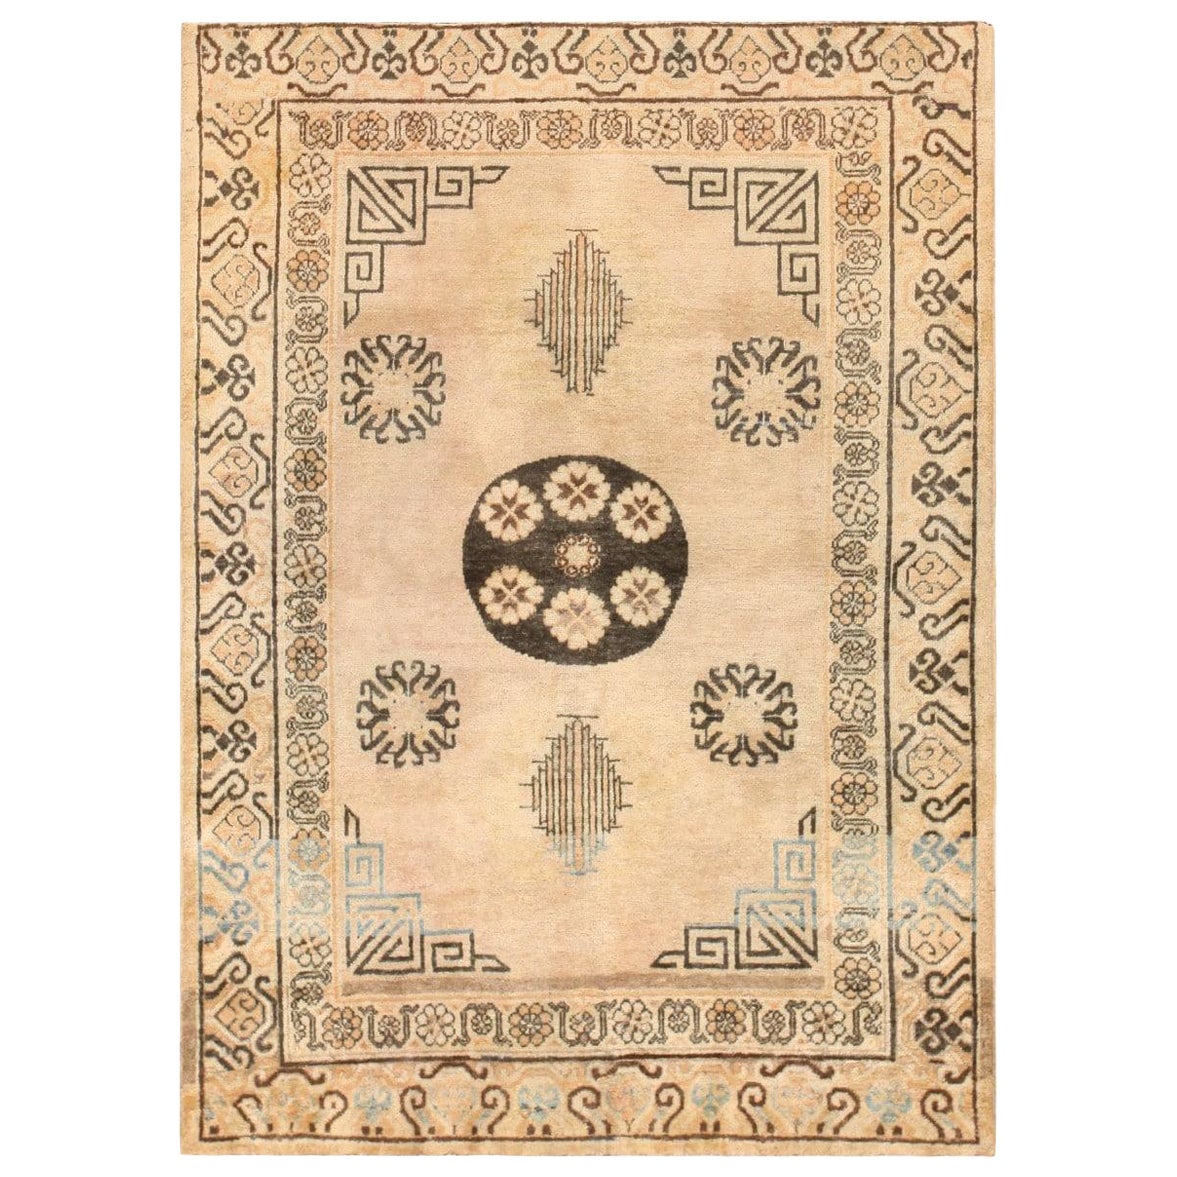 Antique Khotan Carpet. Size: 4 ft 2 in x 5 ft 8 in For Sale